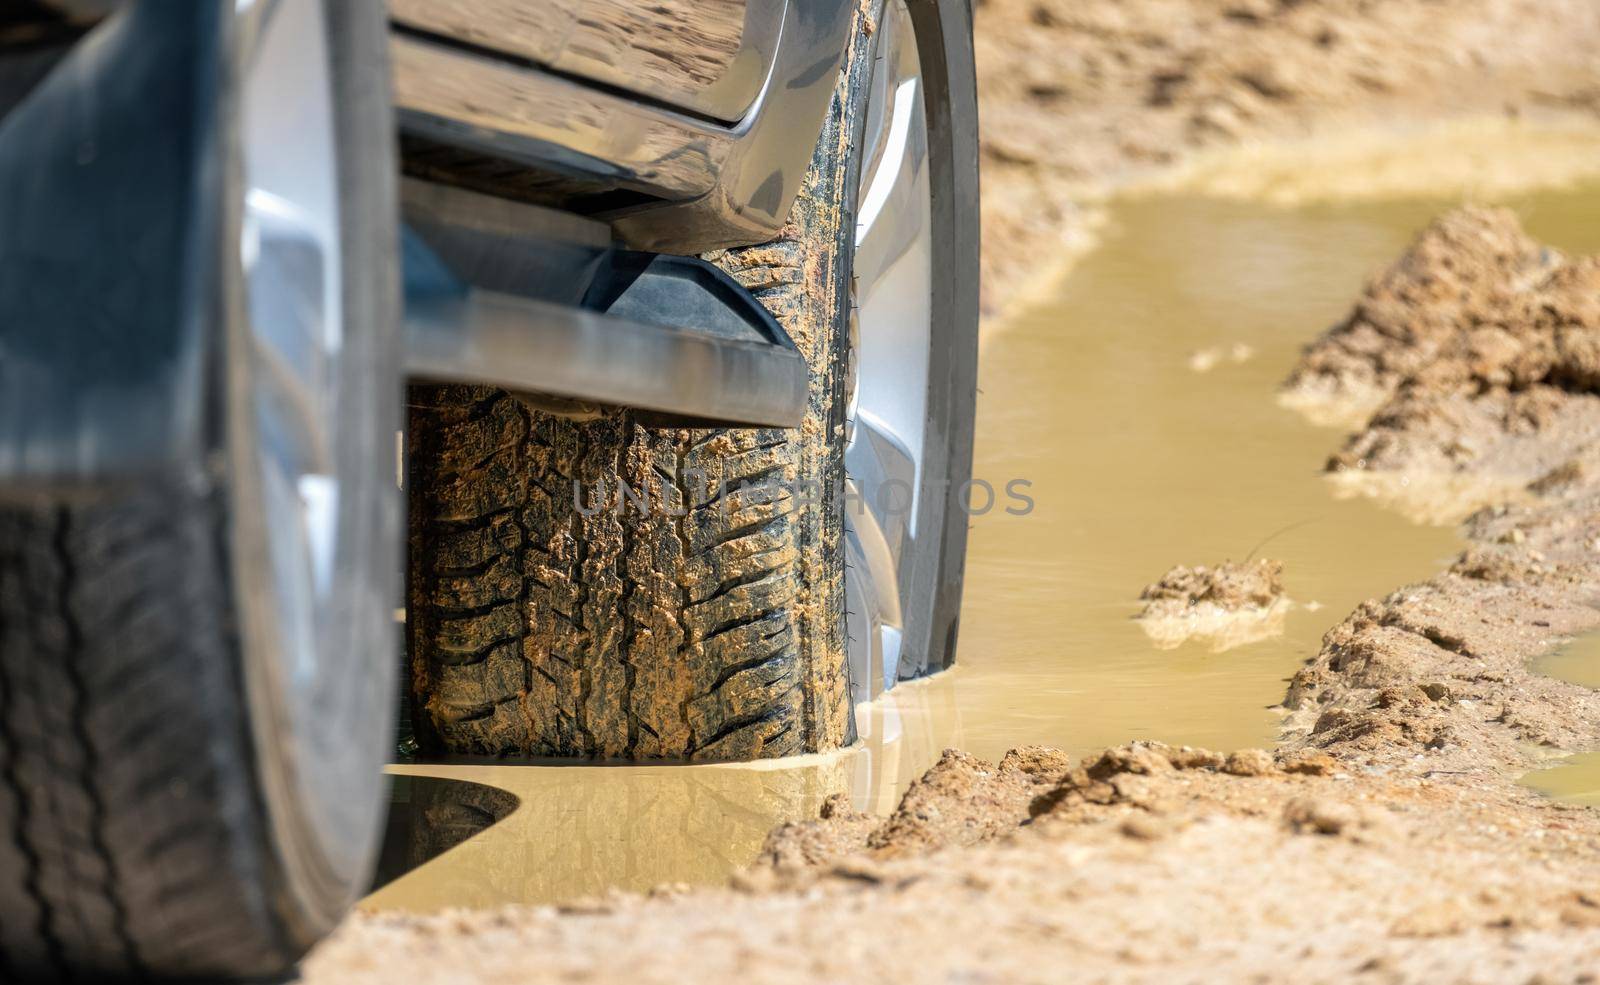 Suv 4wd car rides through deep muddy puddle